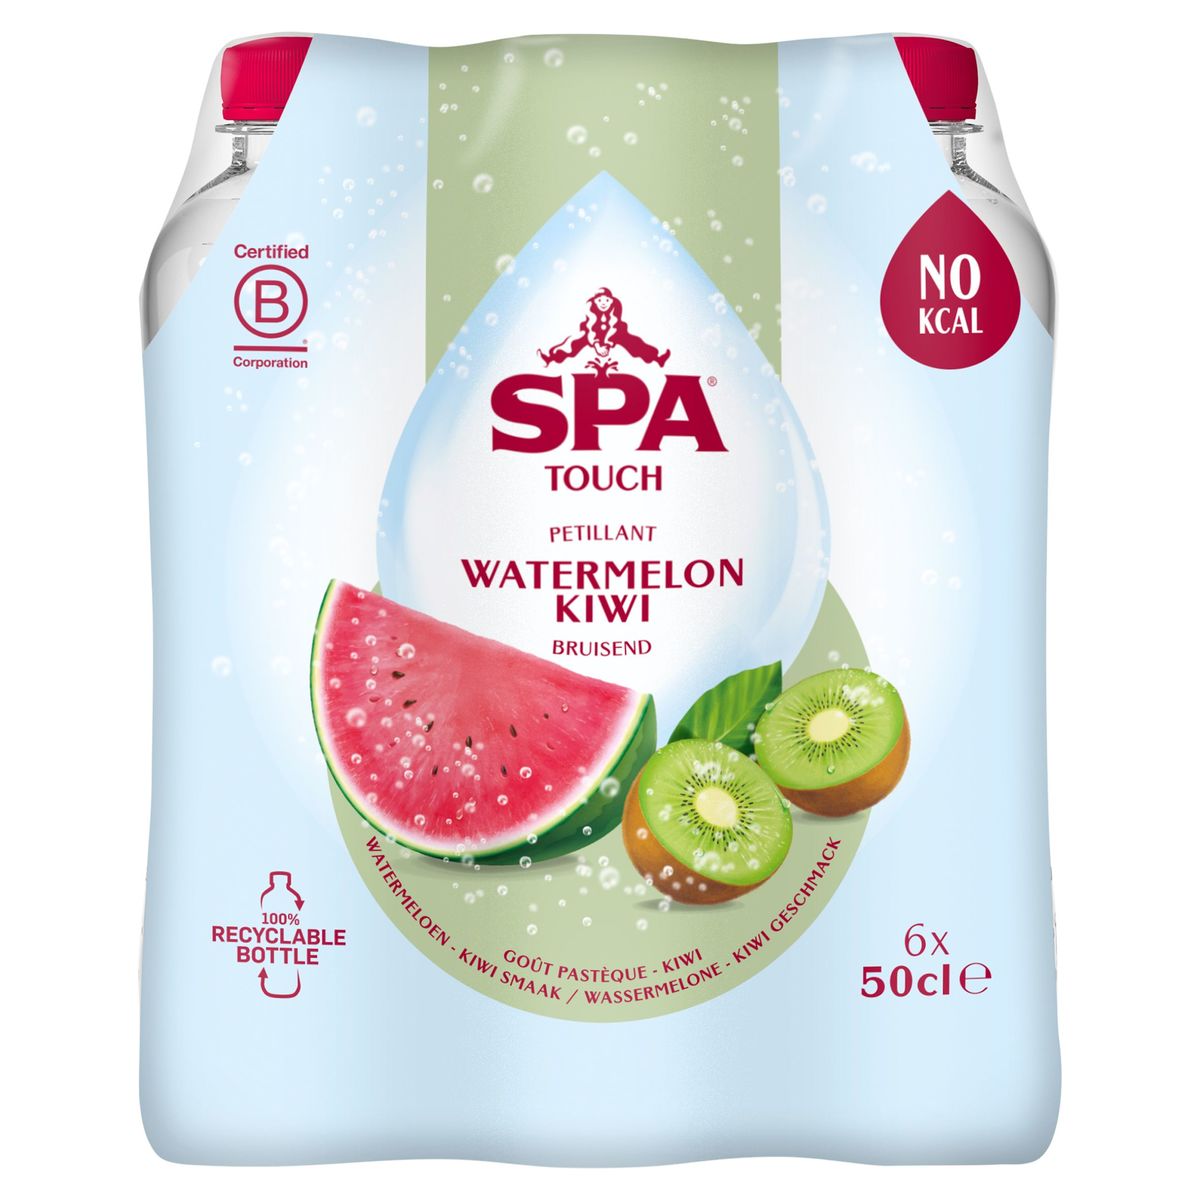 SPA TOUCH Bruisend Mineraalwater watermeloen kiwi 6 X 50 cl